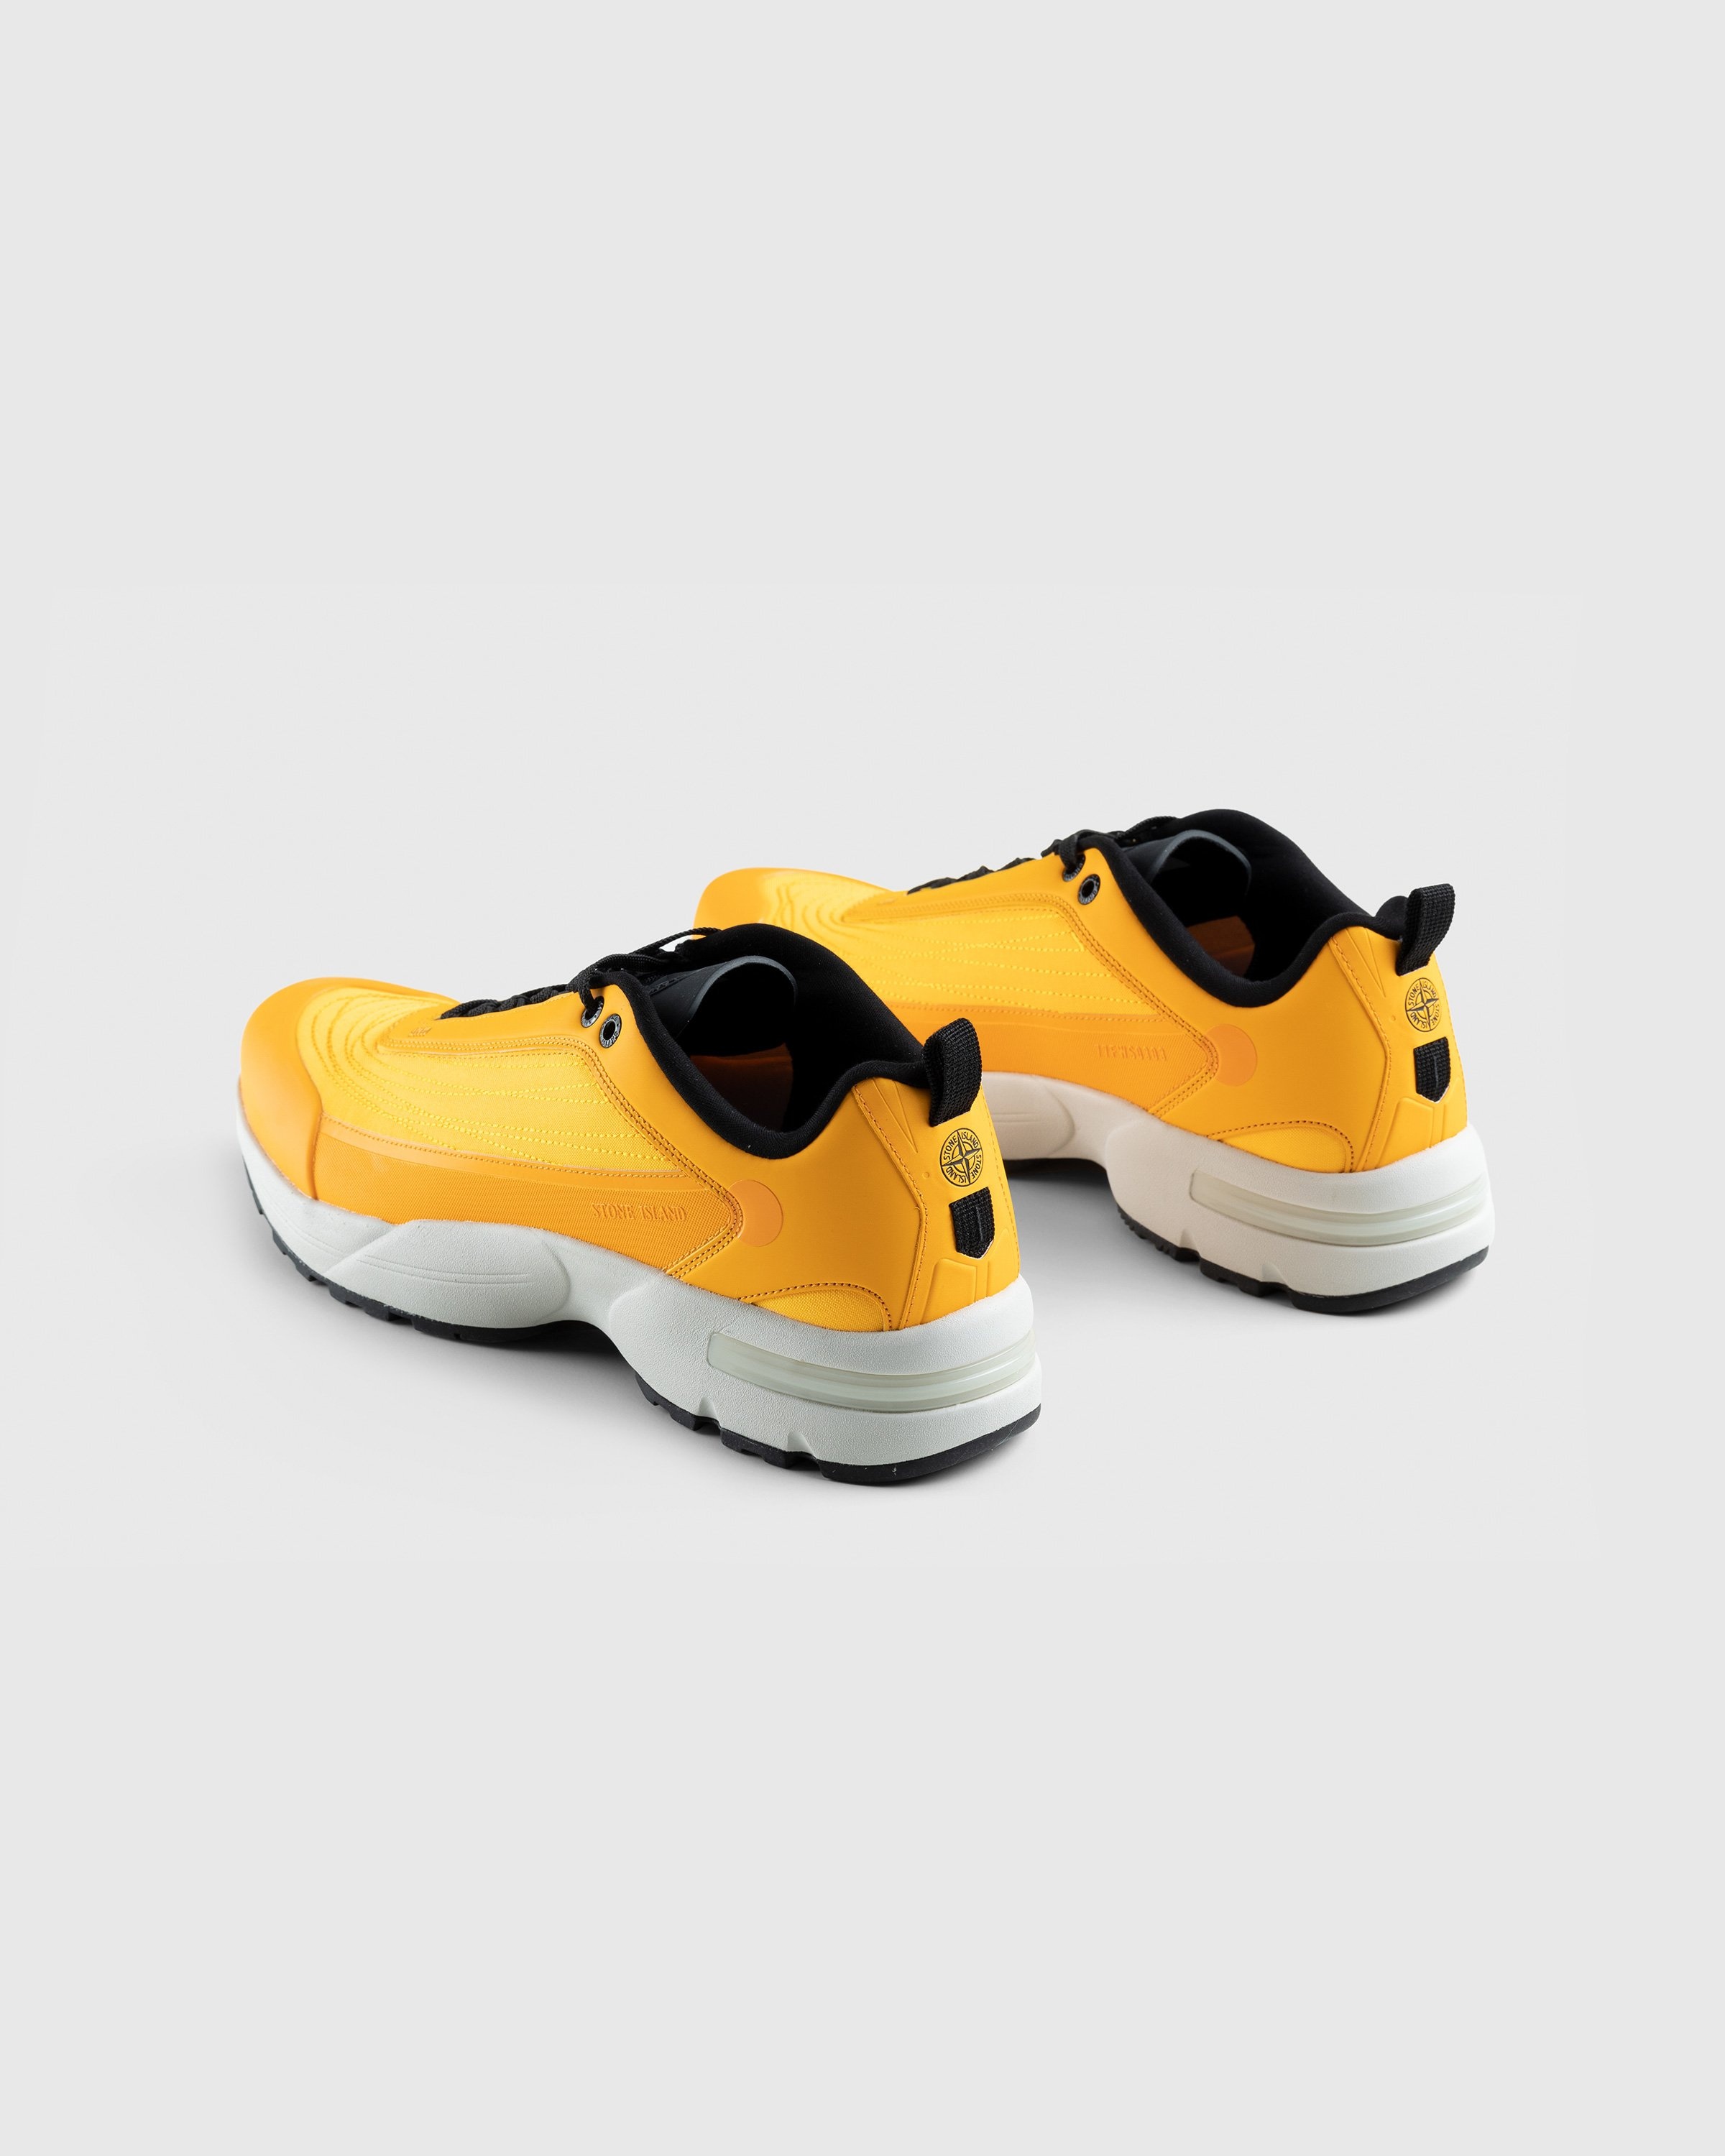 Stone Island – Grime Sneaker Orange - Low Top Sneakers - Orange - Image 4